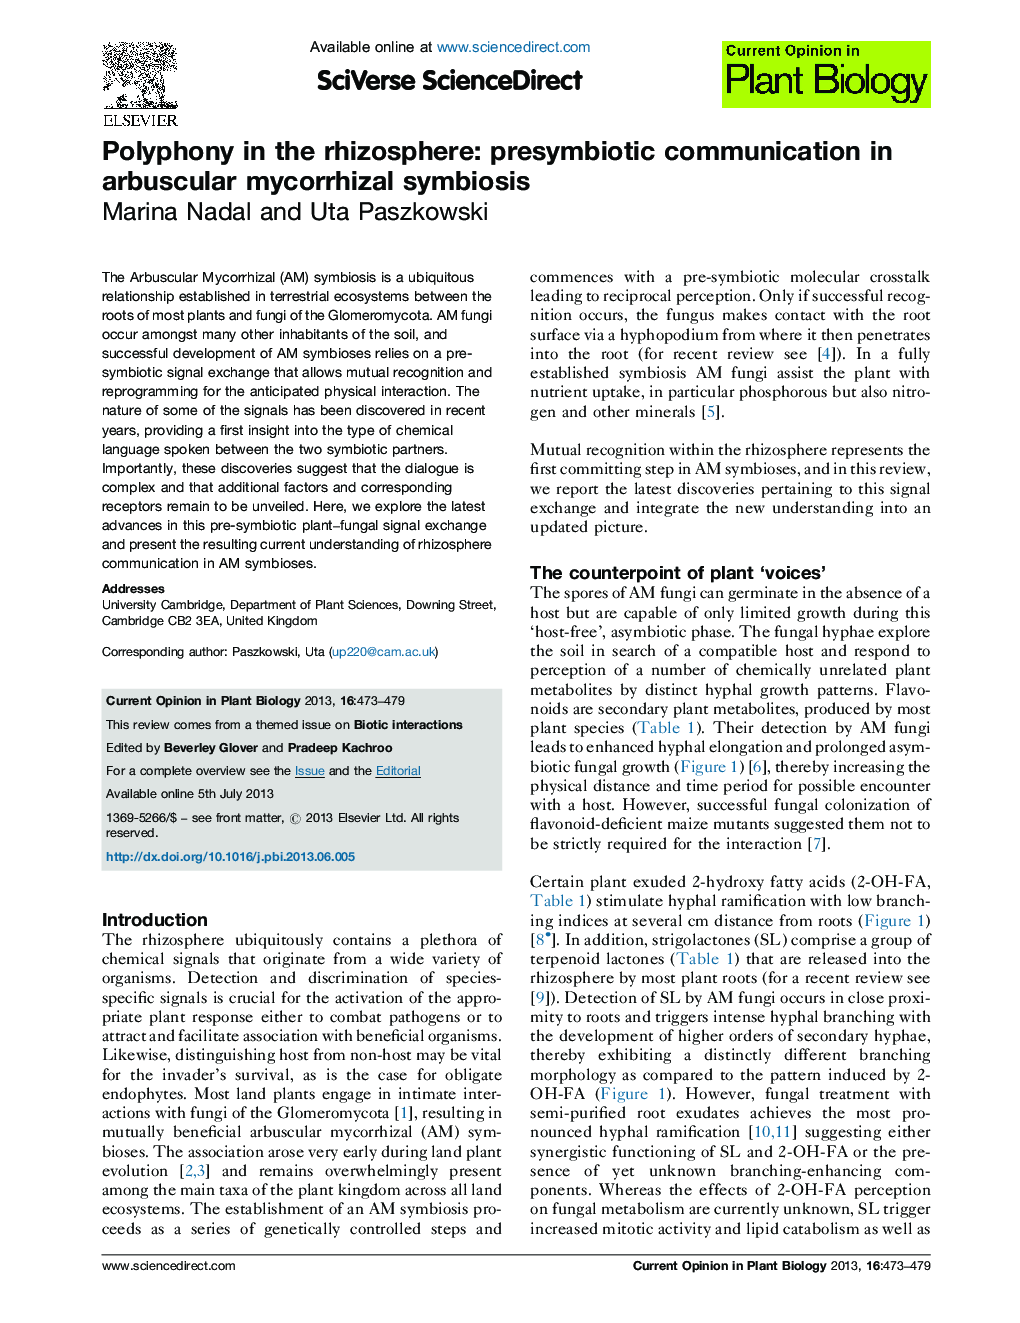 Polyphony in the rhizosphere: presymbiotic communication in arbuscular mycorrhizal symbiosis